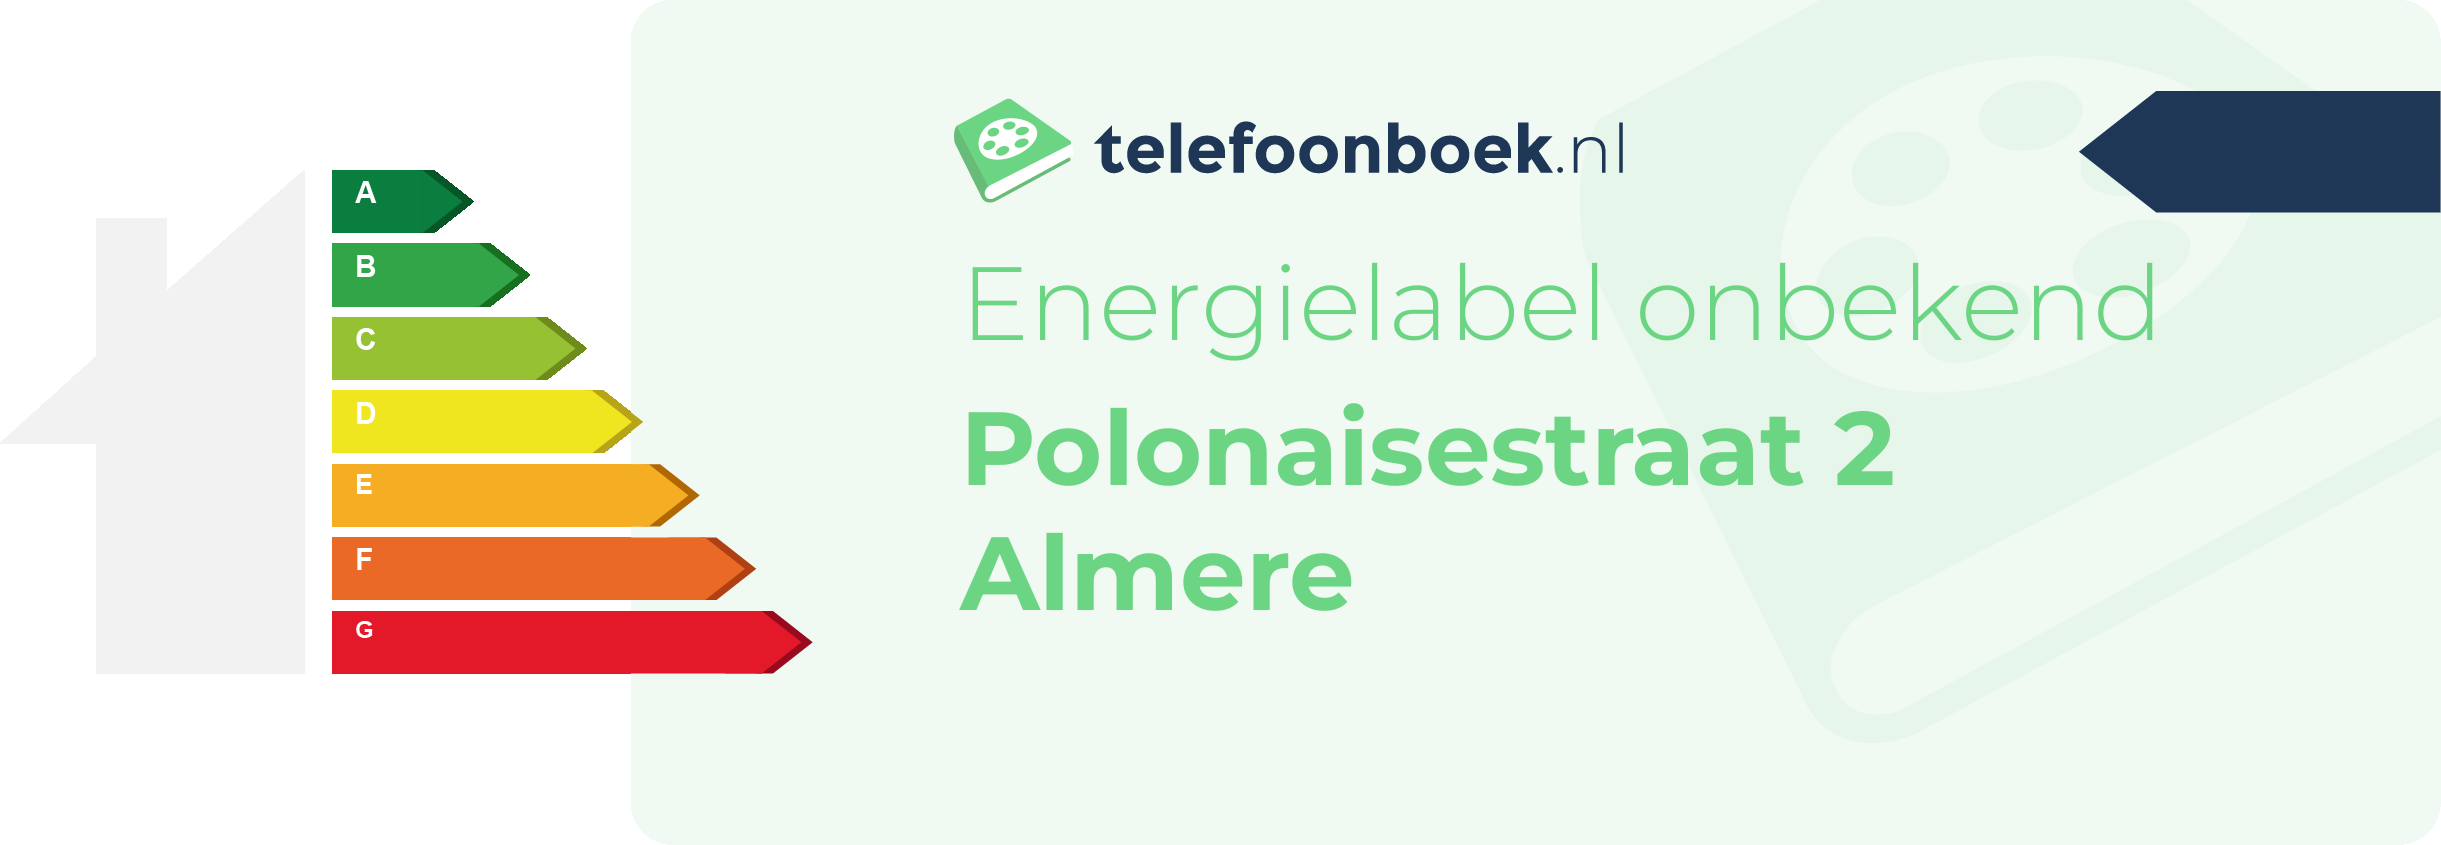 Energielabel Polonaisestraat 2 Almere